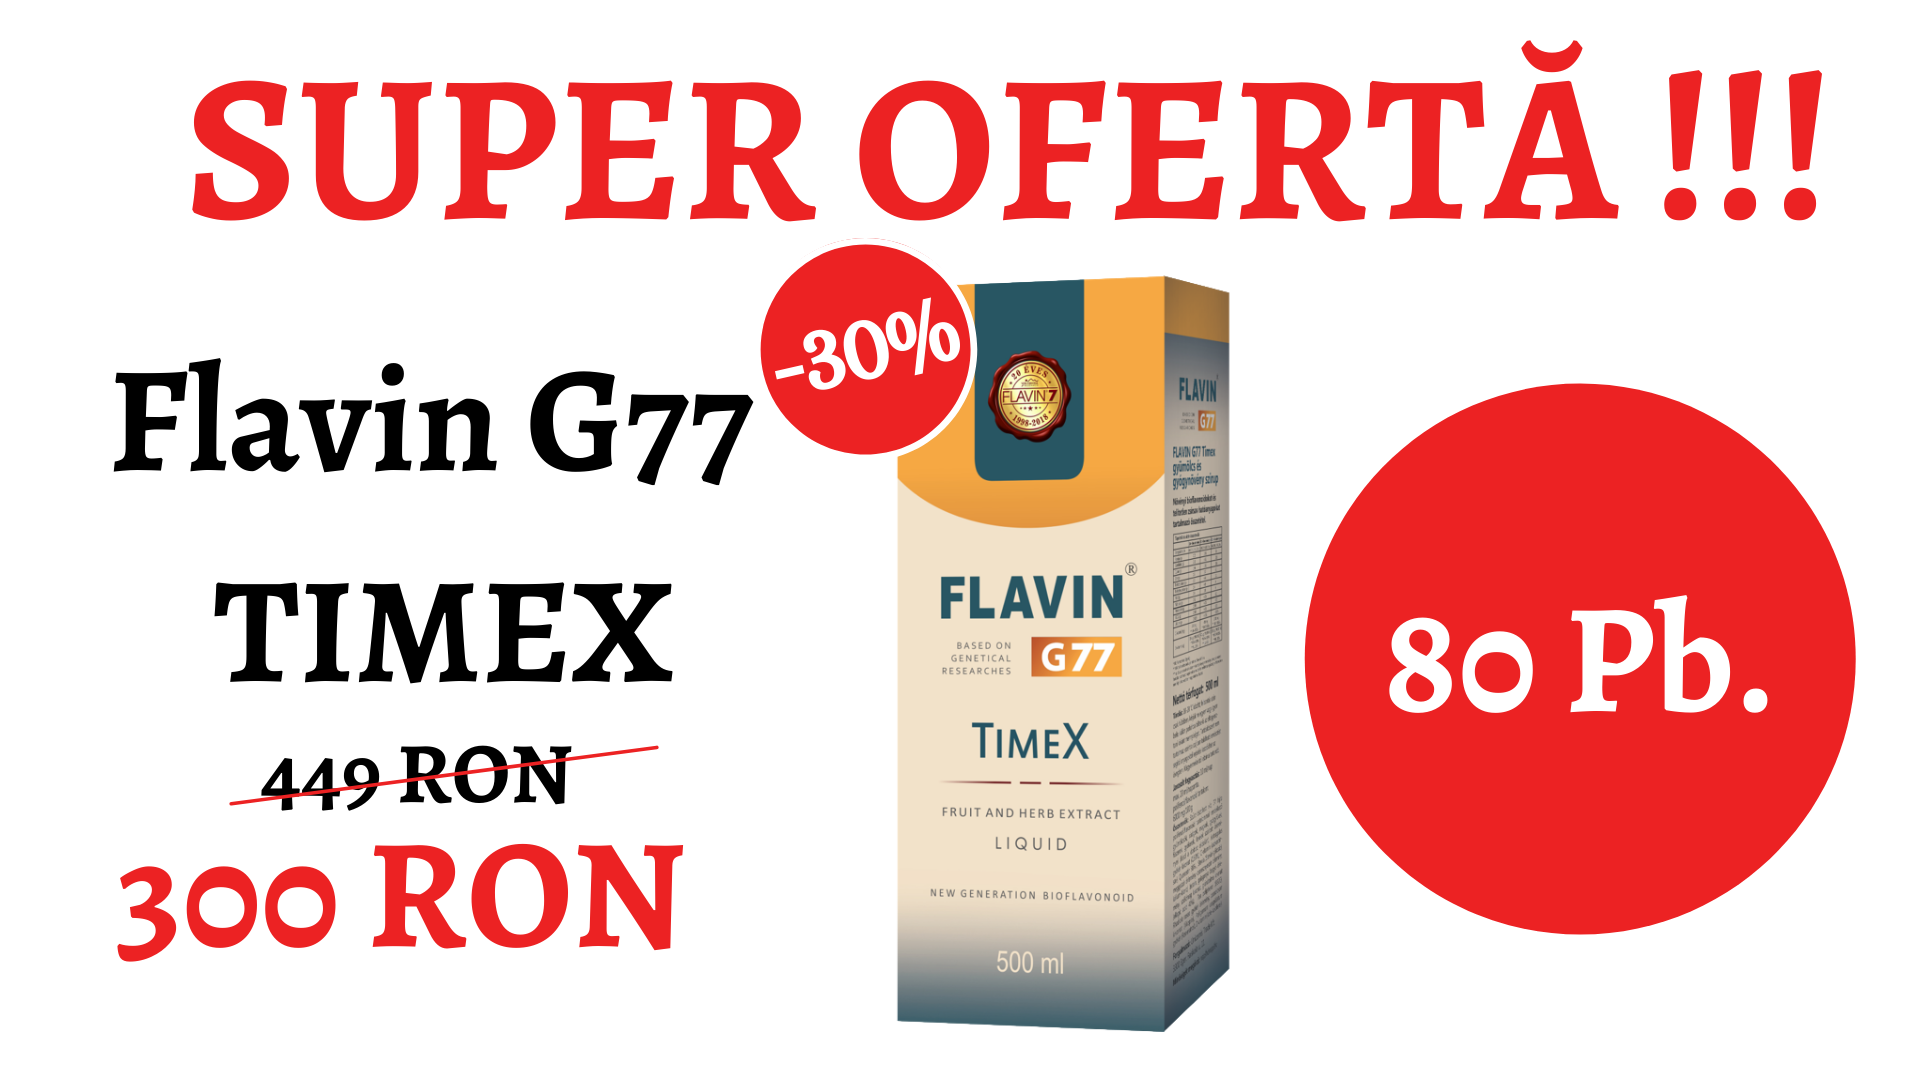 Flavin G77 TimeX 500 ml